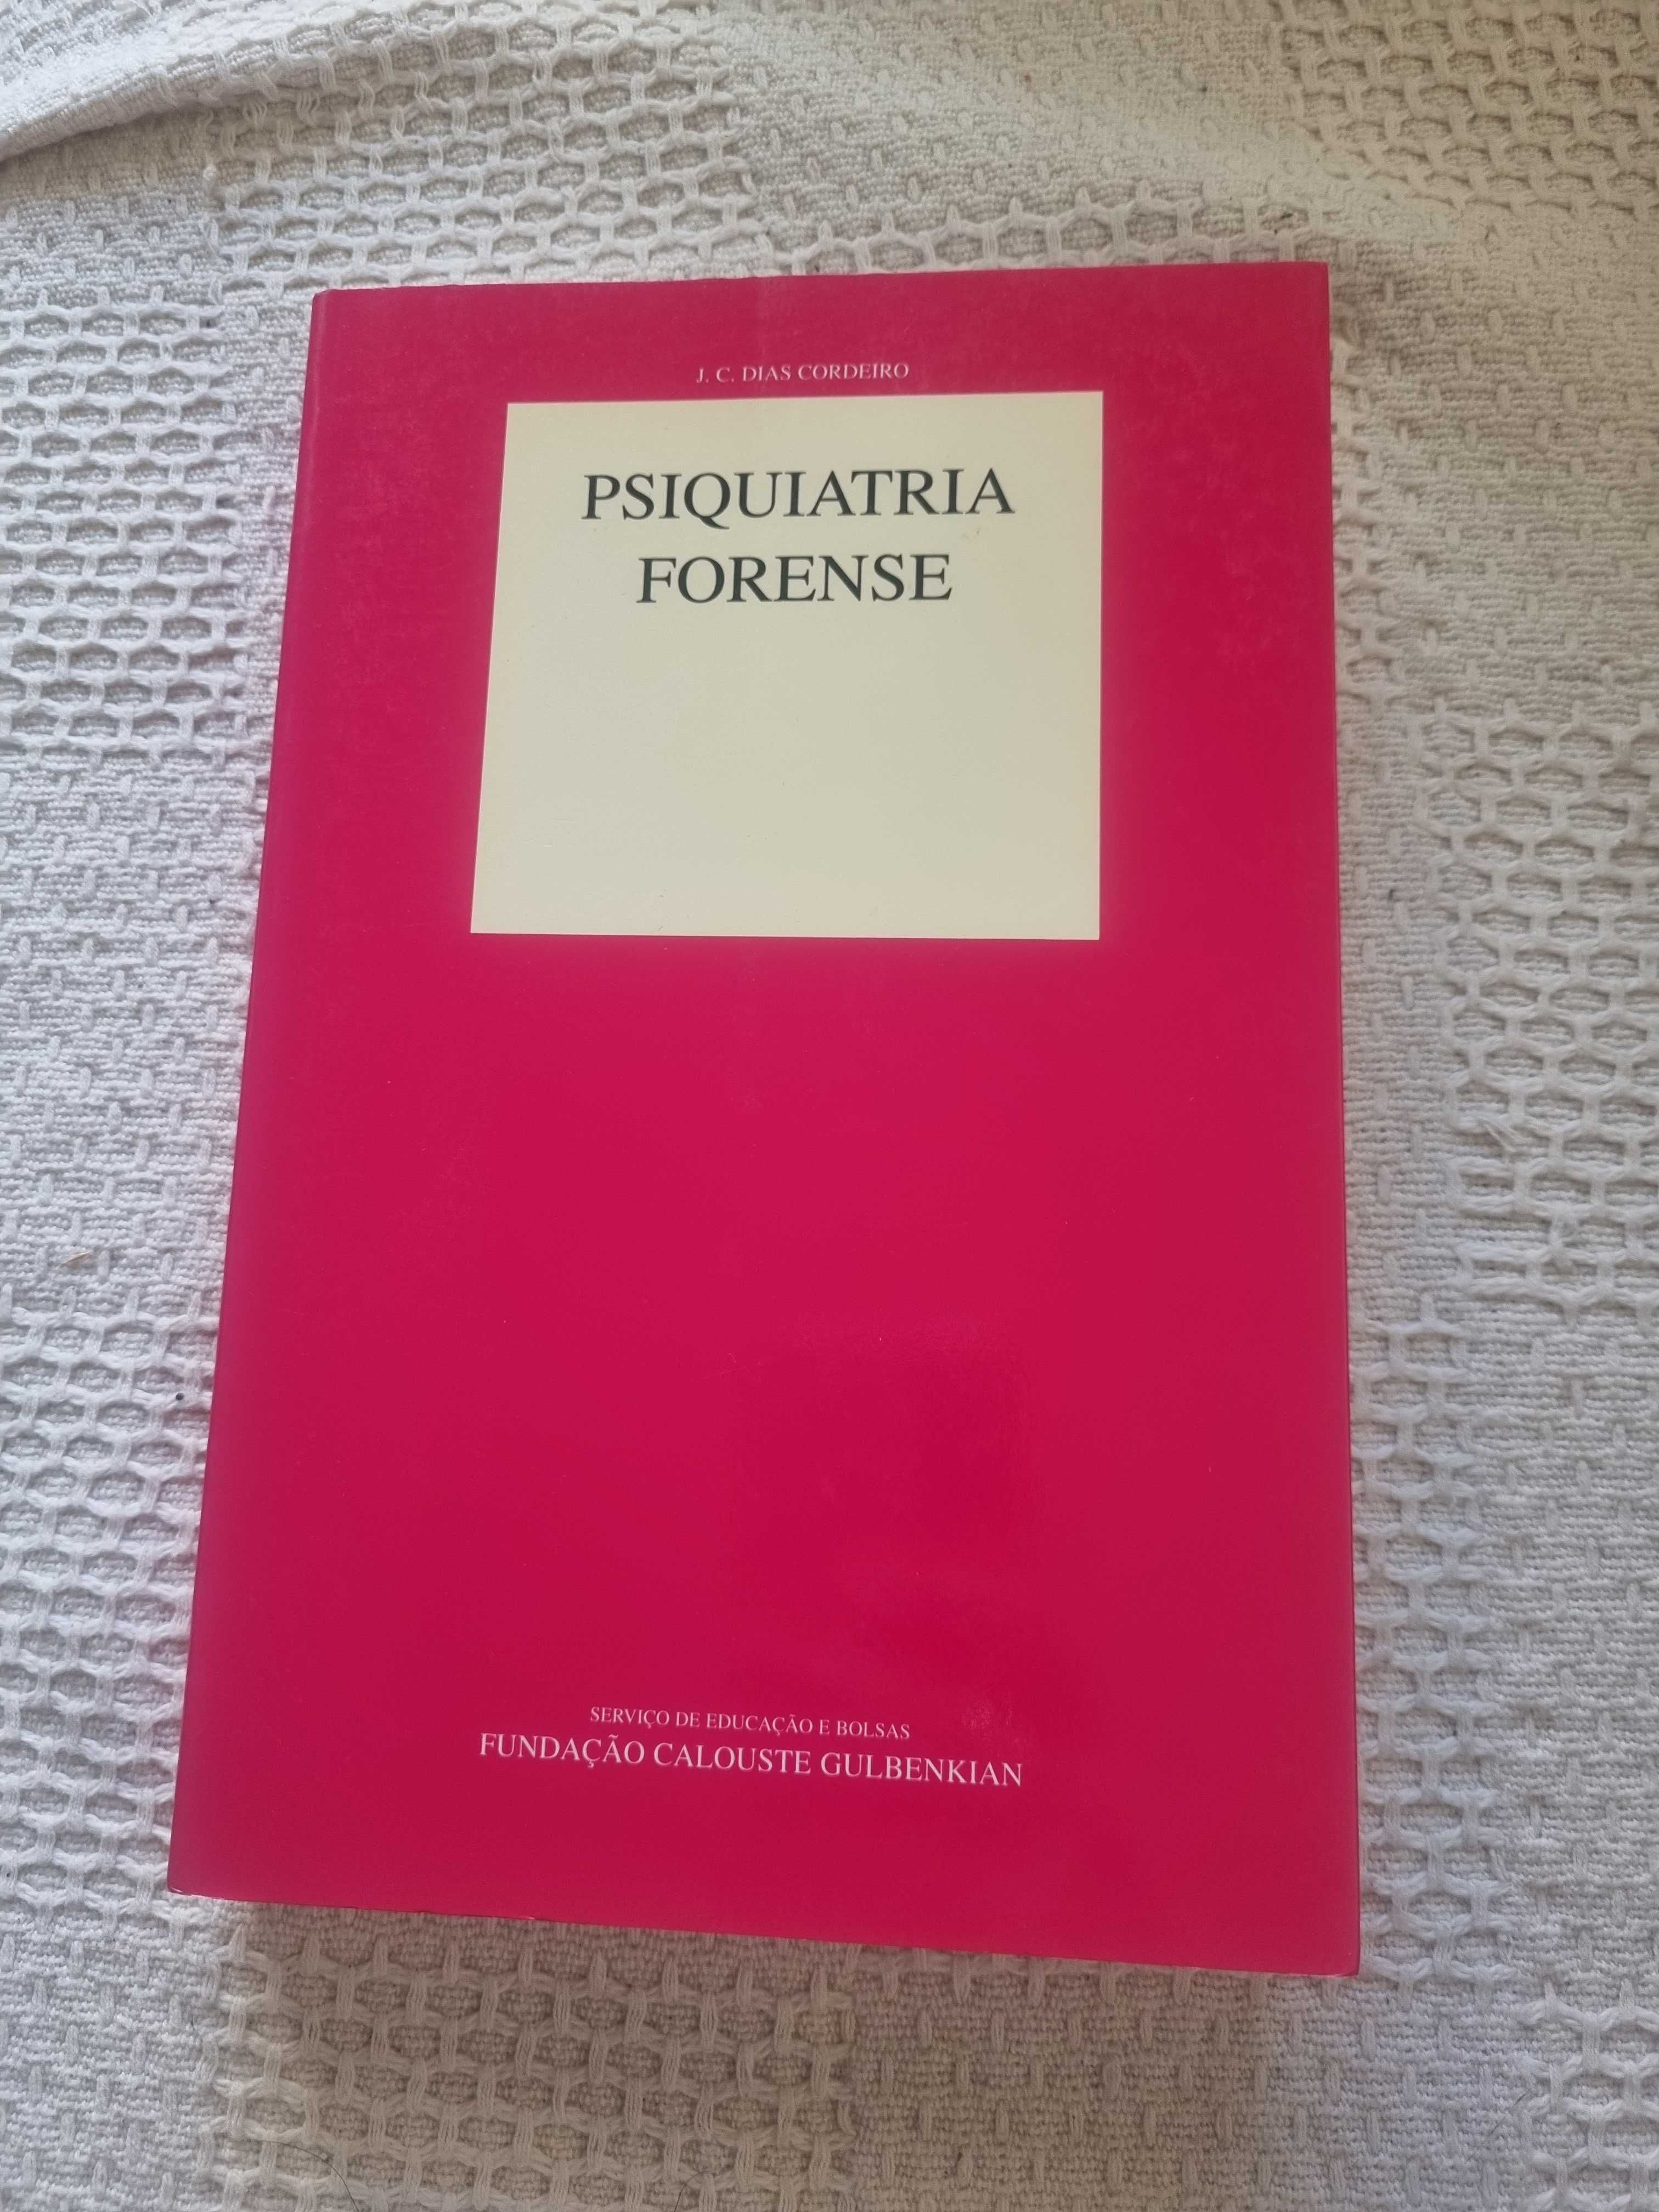 Livro "Psiquiatria Forense"